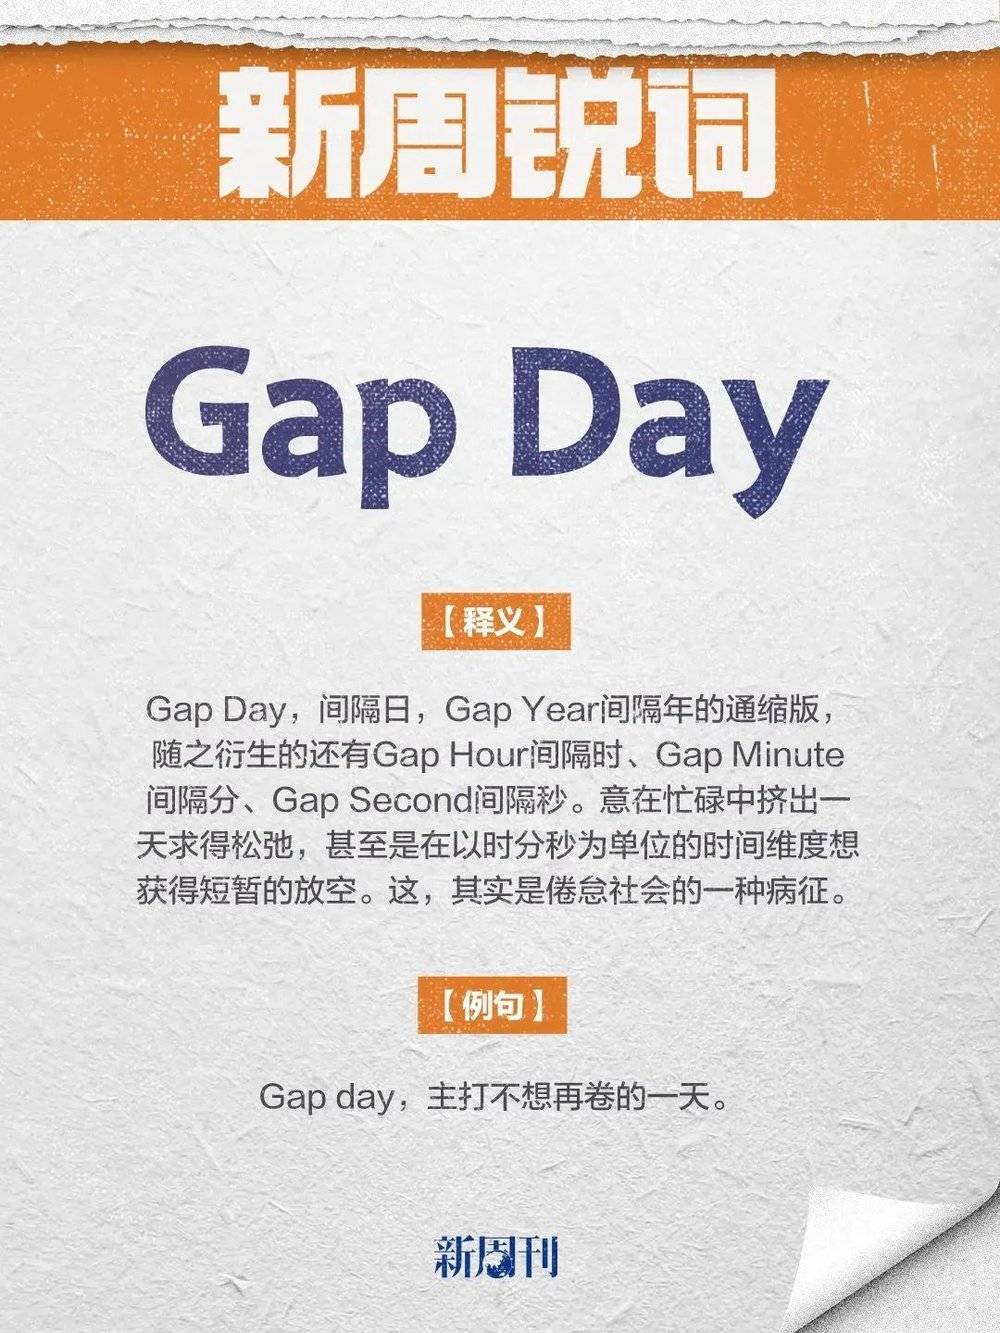 《新周刊》对Gap Day的解释。/新周刊微博